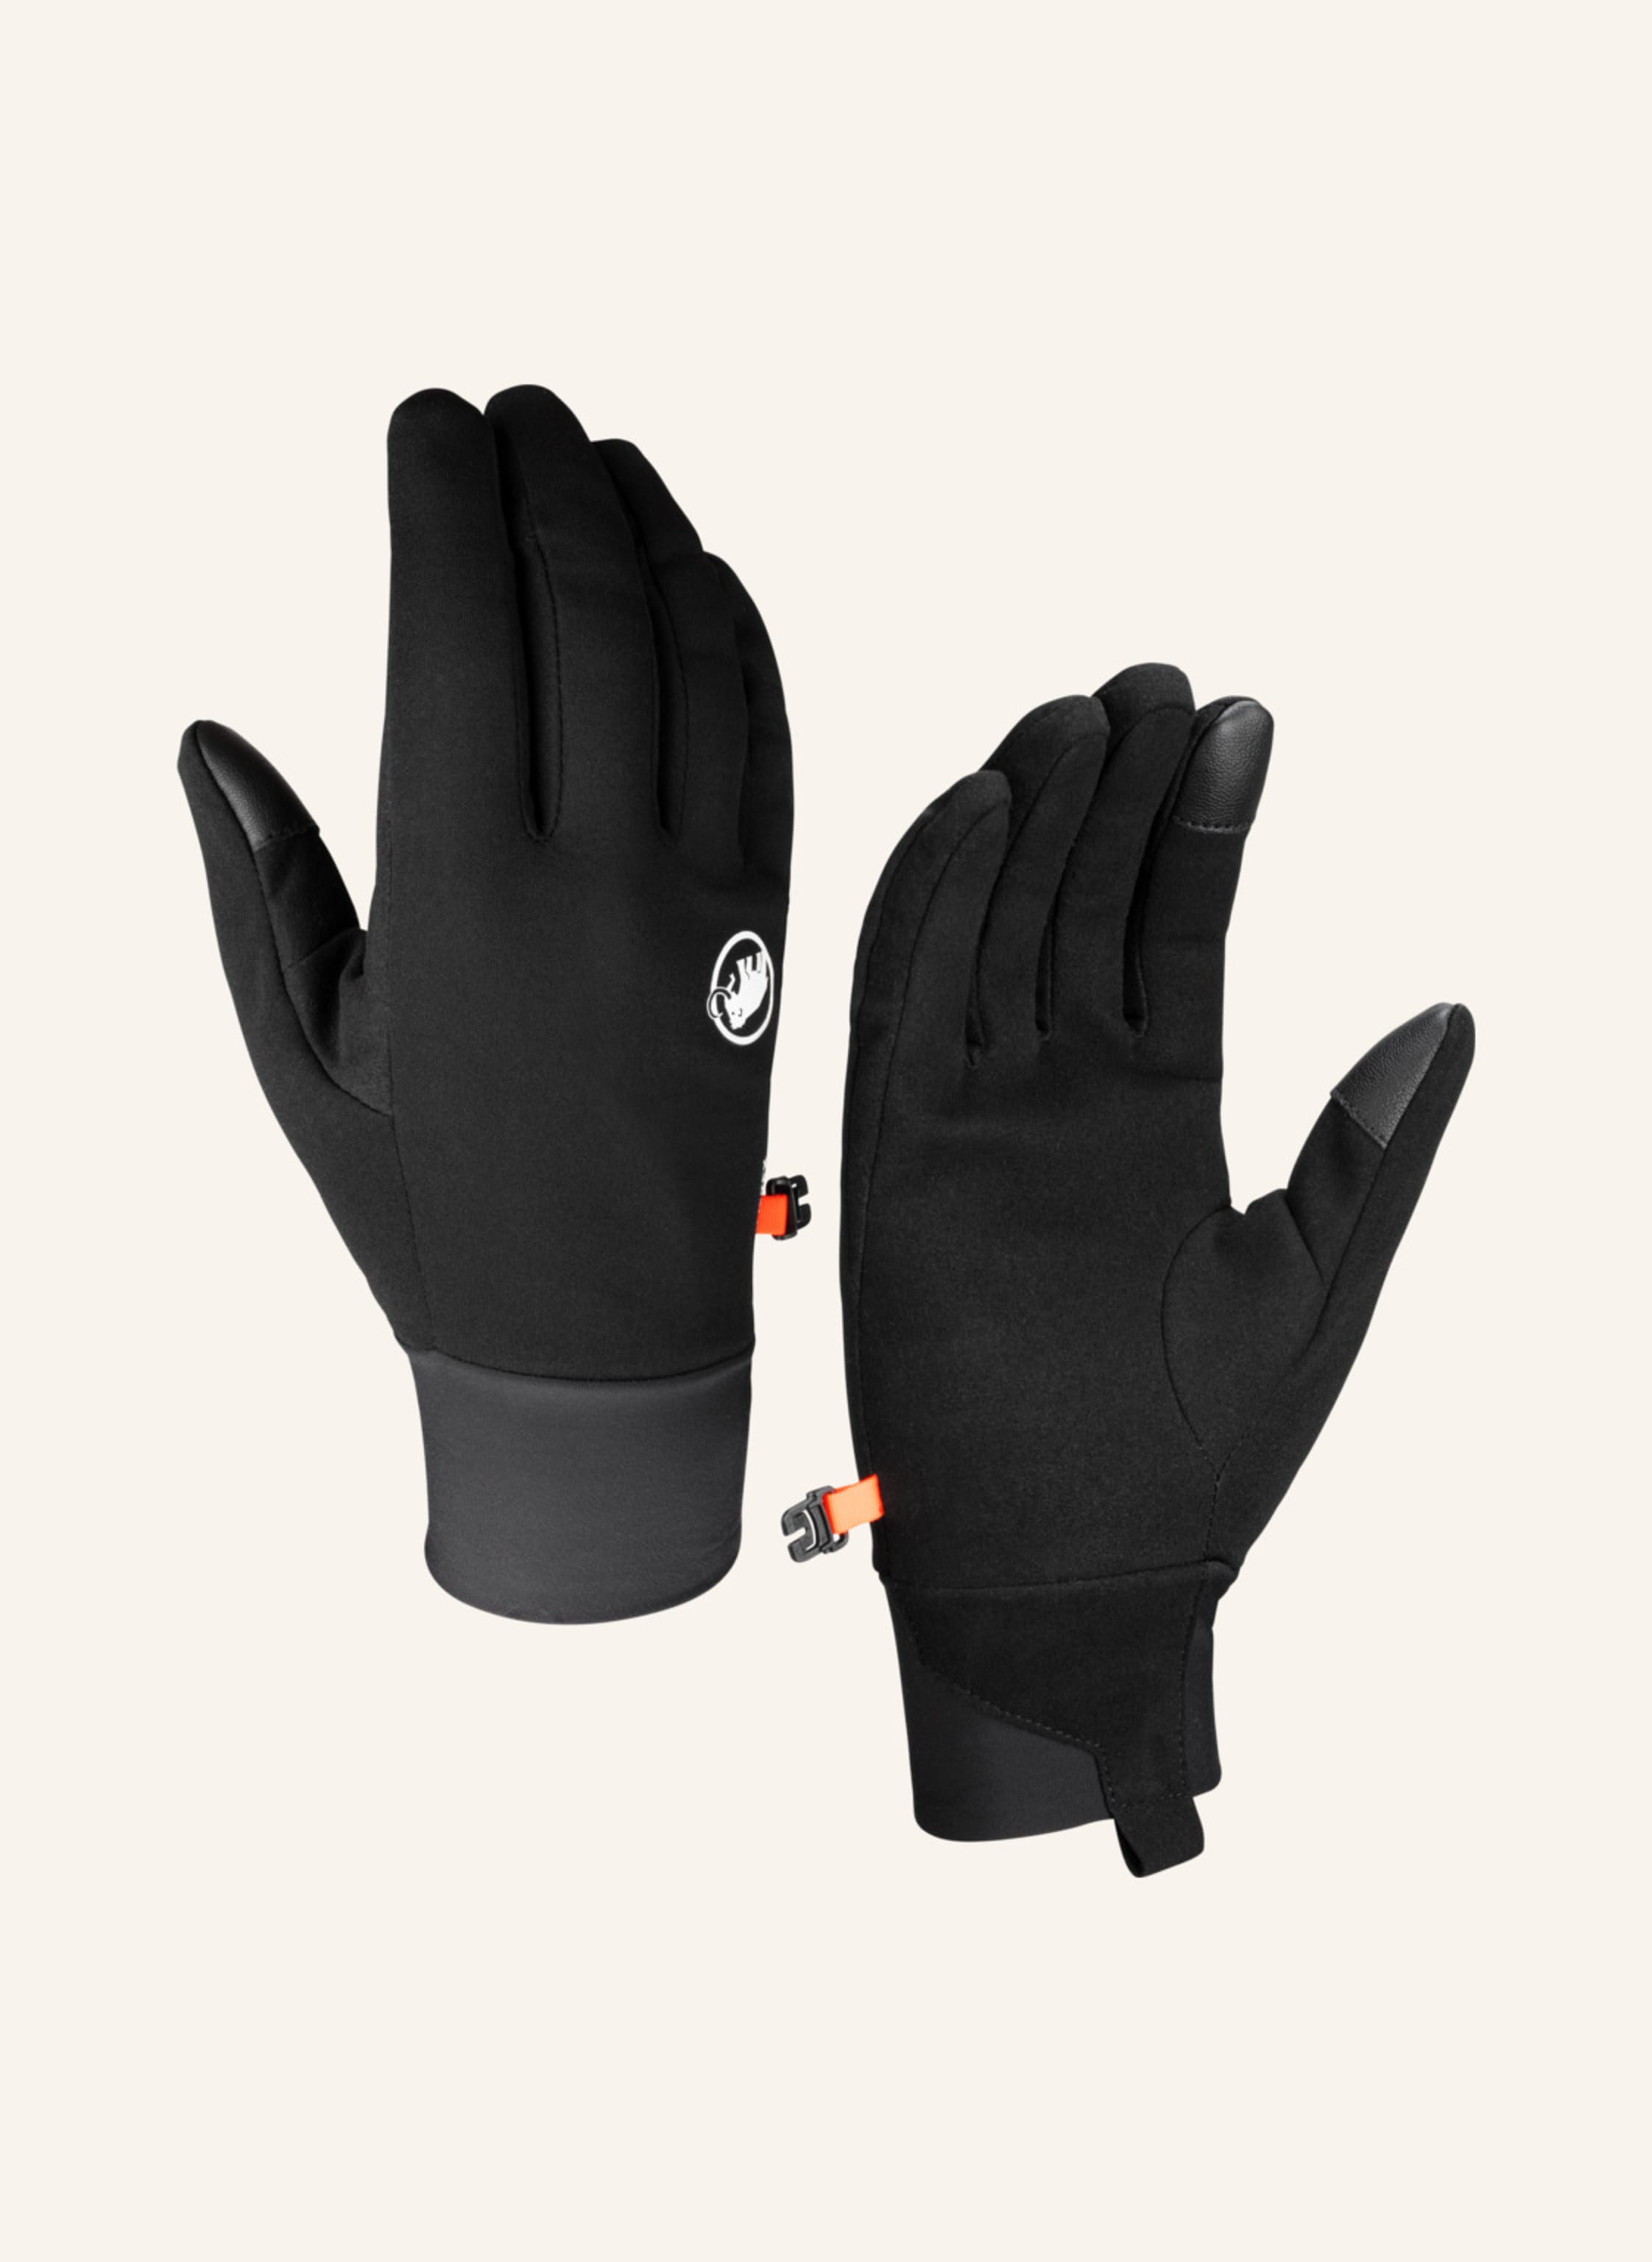 Multisport-Handschuhe Walk Touch-Tec™ schwarz Breuninger Accessoires Handschuhe 